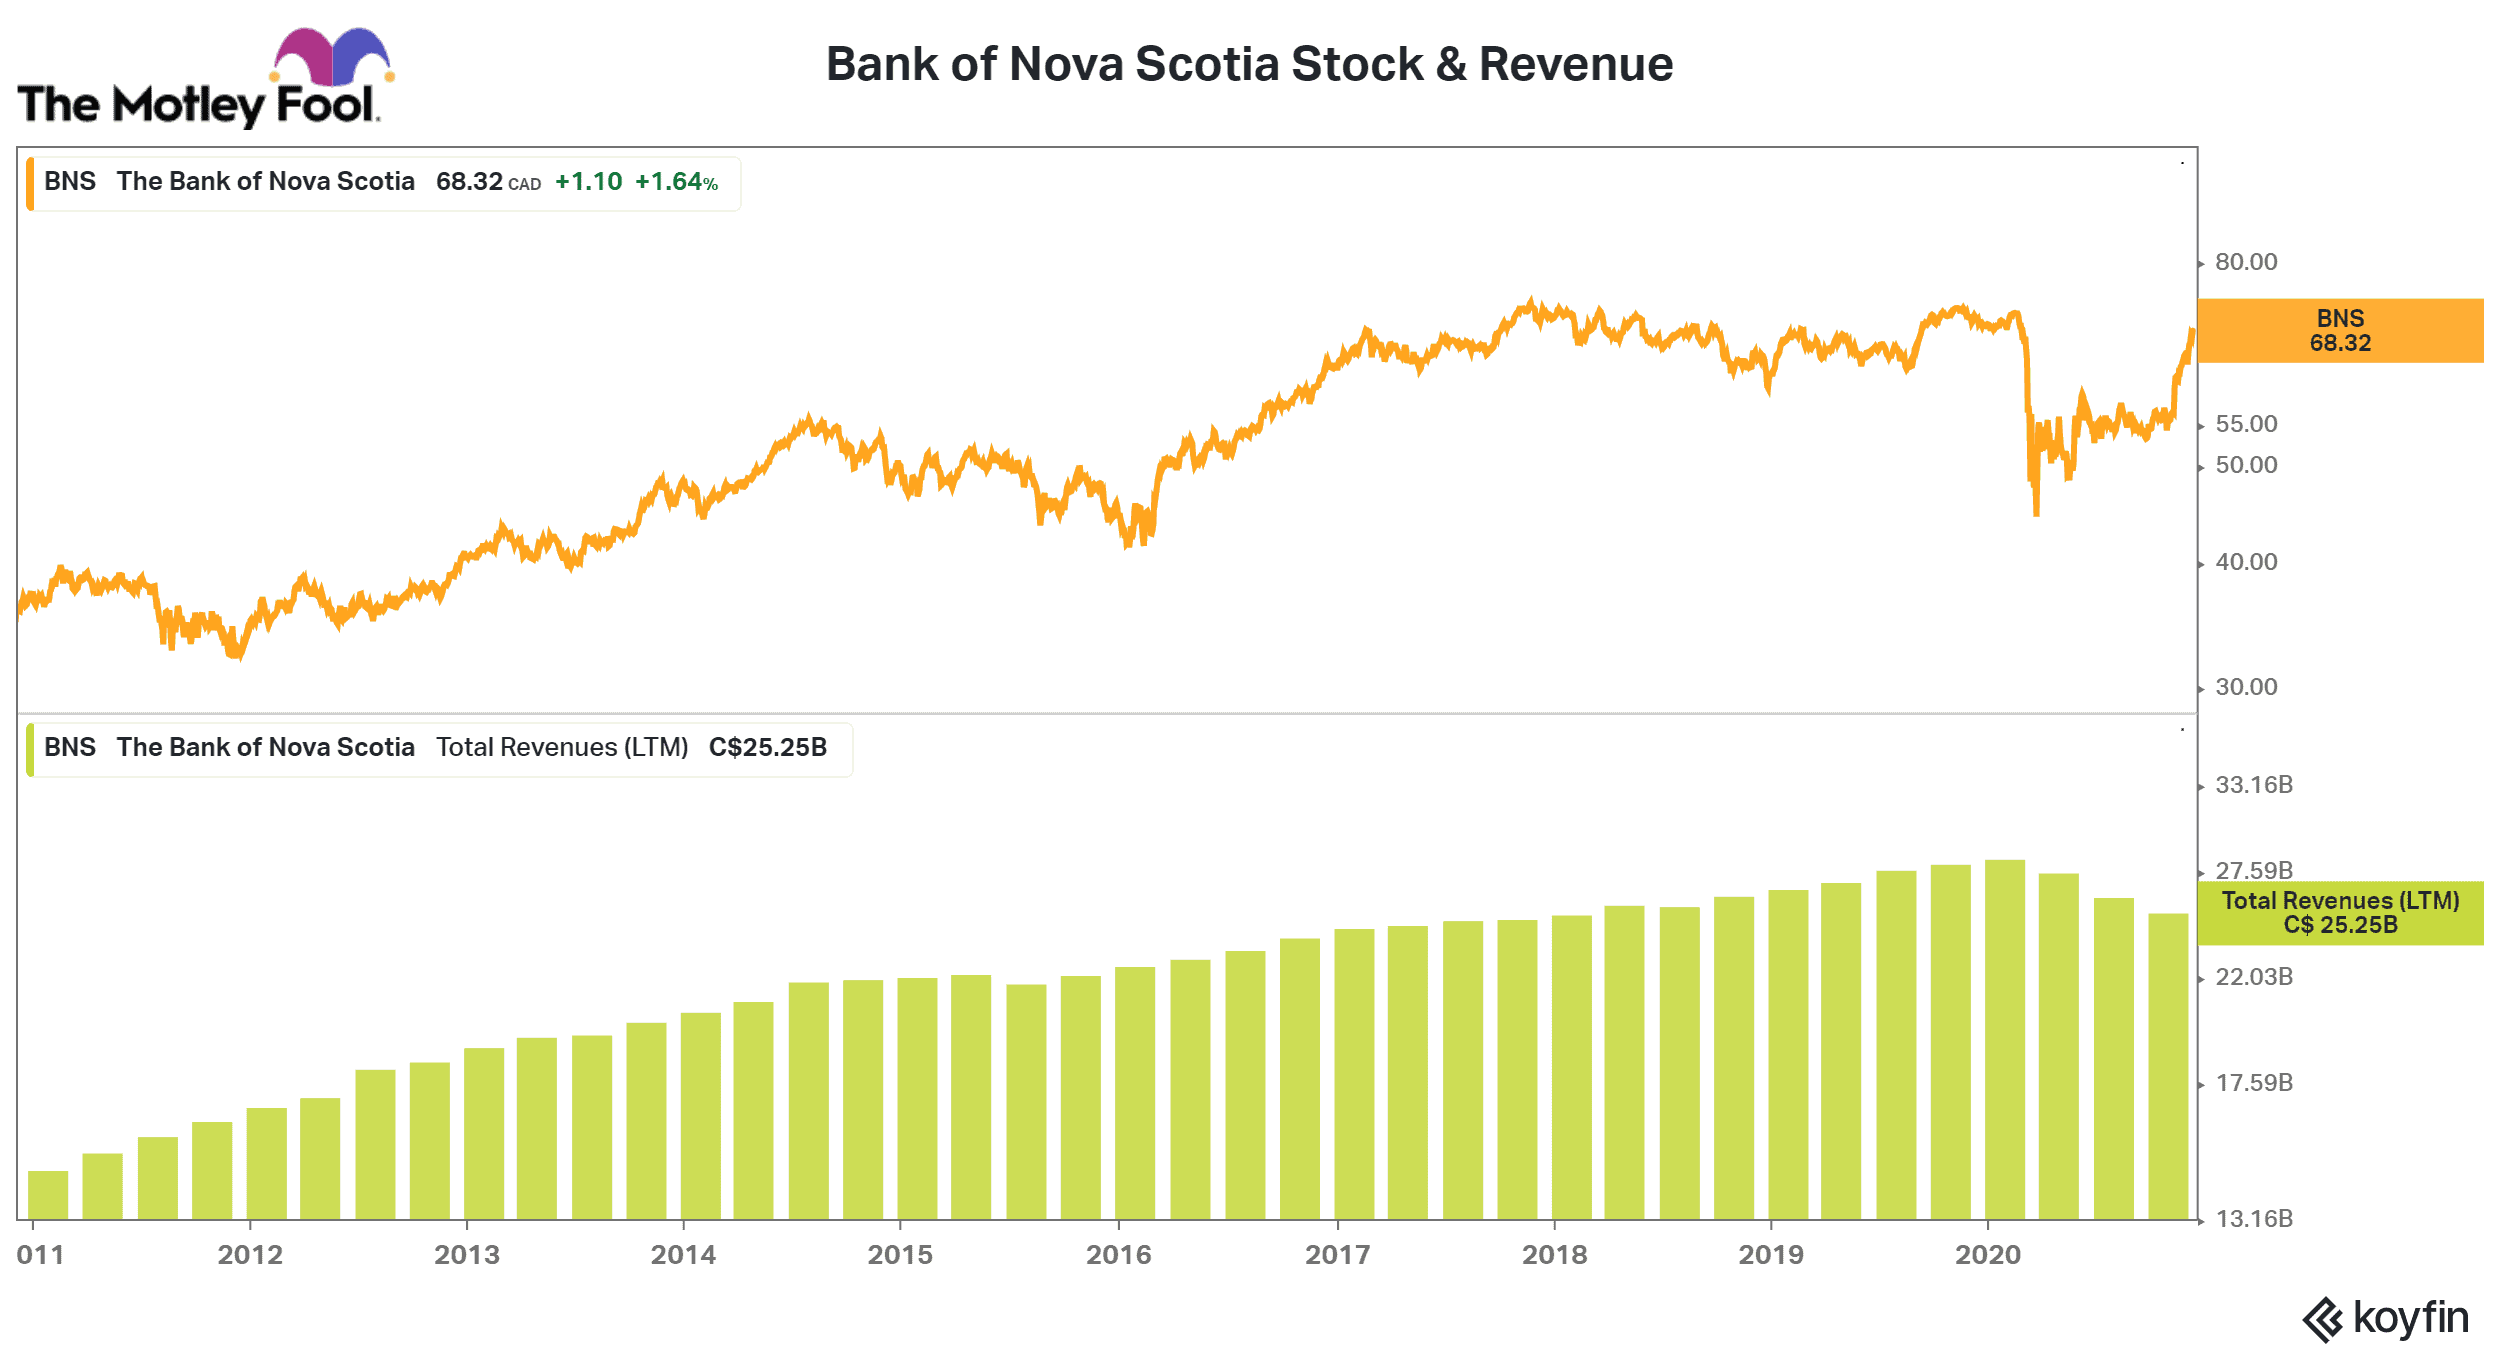 Bank of Nova Scotia Stock & Revenue